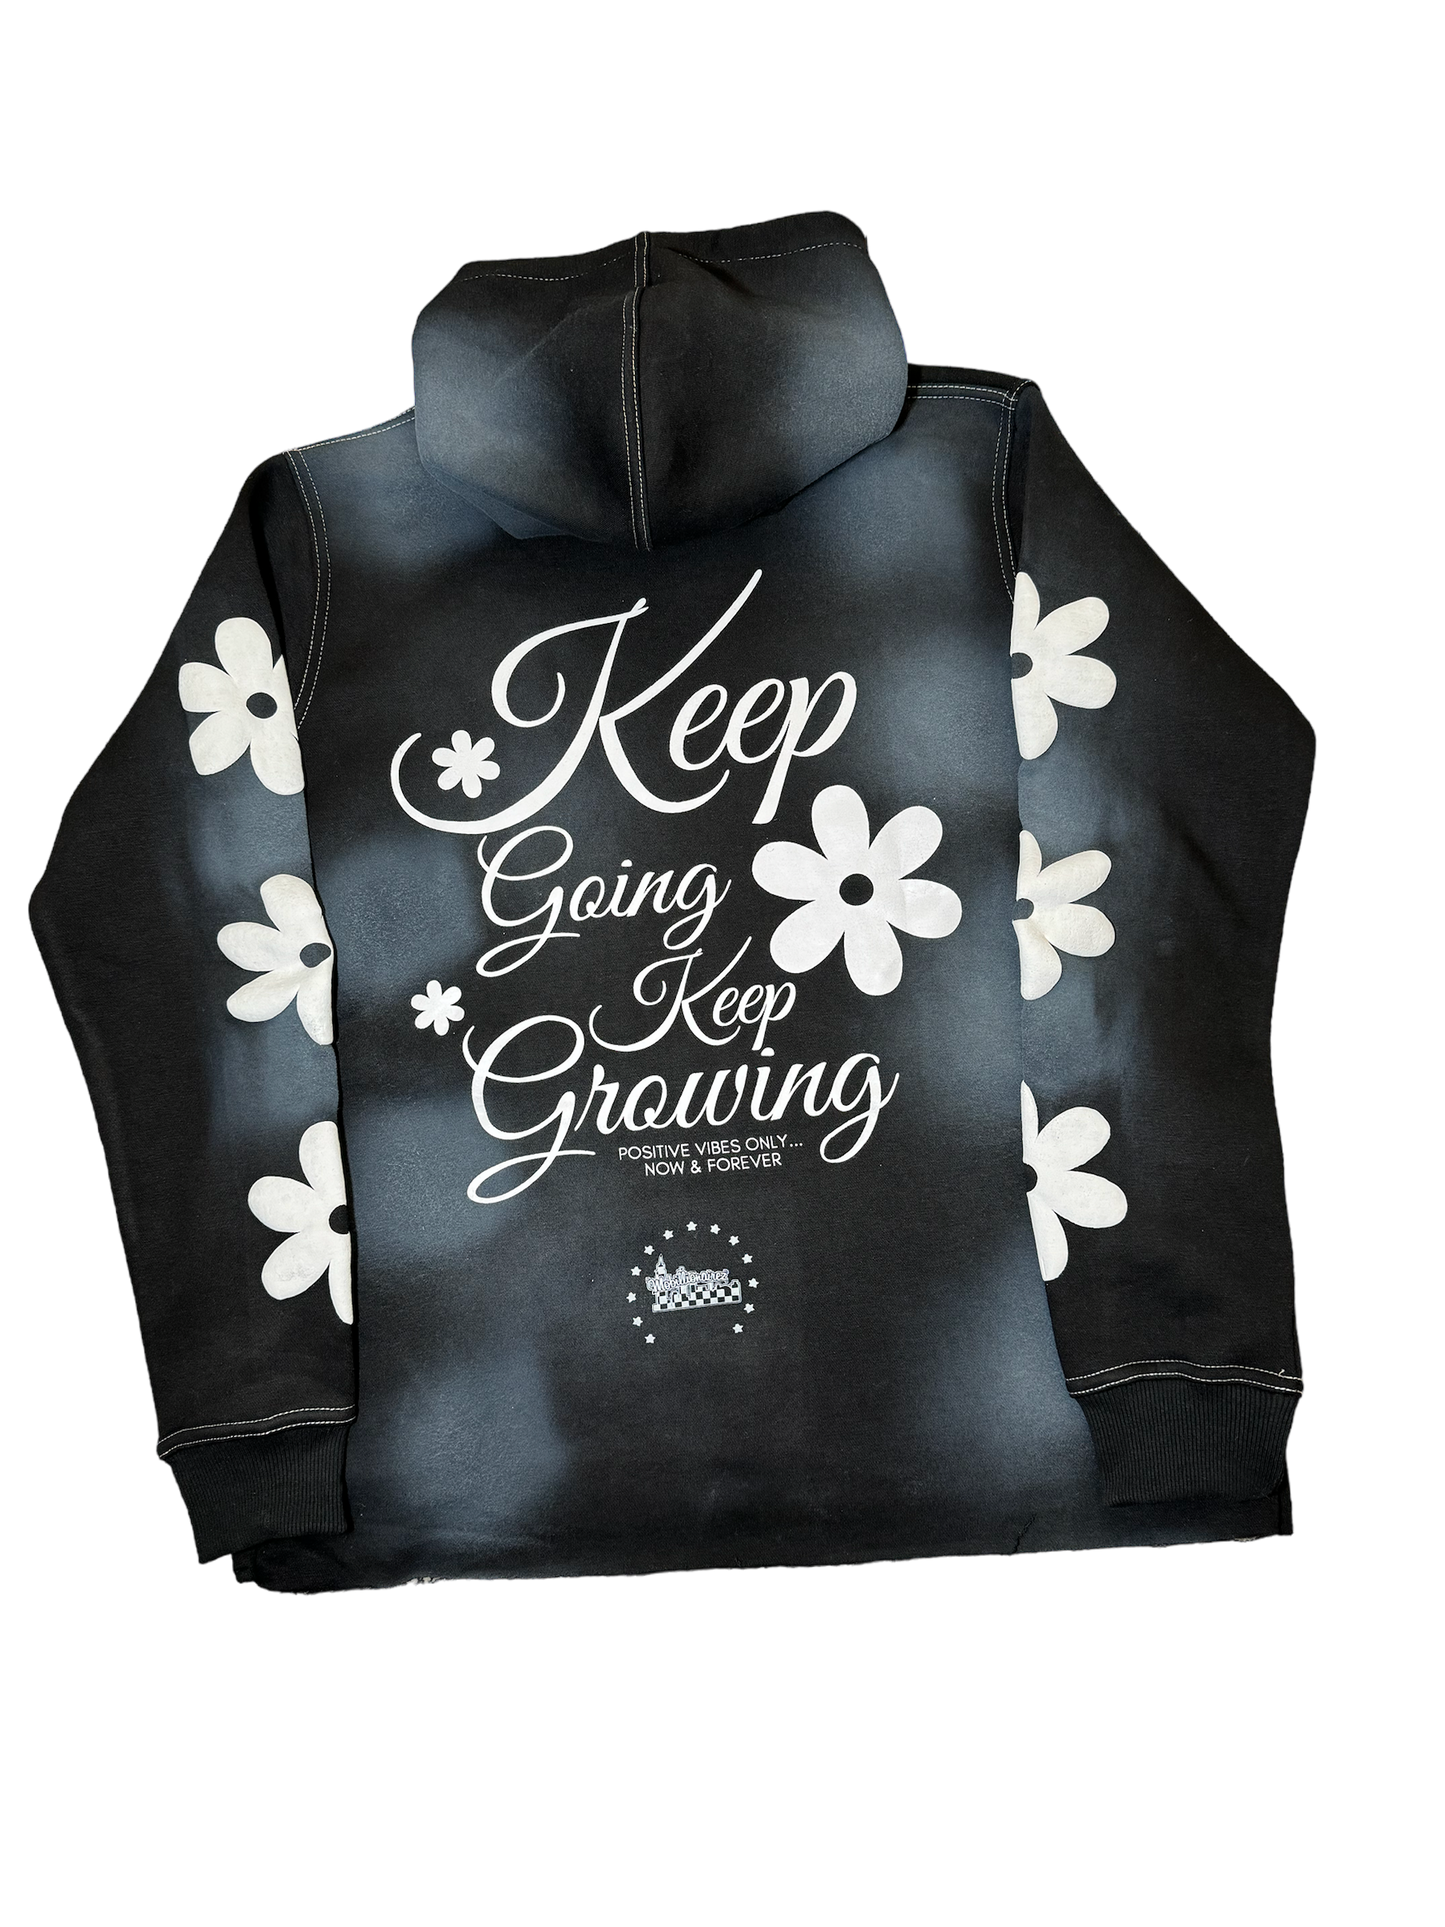 Mobillionairez "Keep Going/Keep Growing" Hoodie Black - (Unisex)